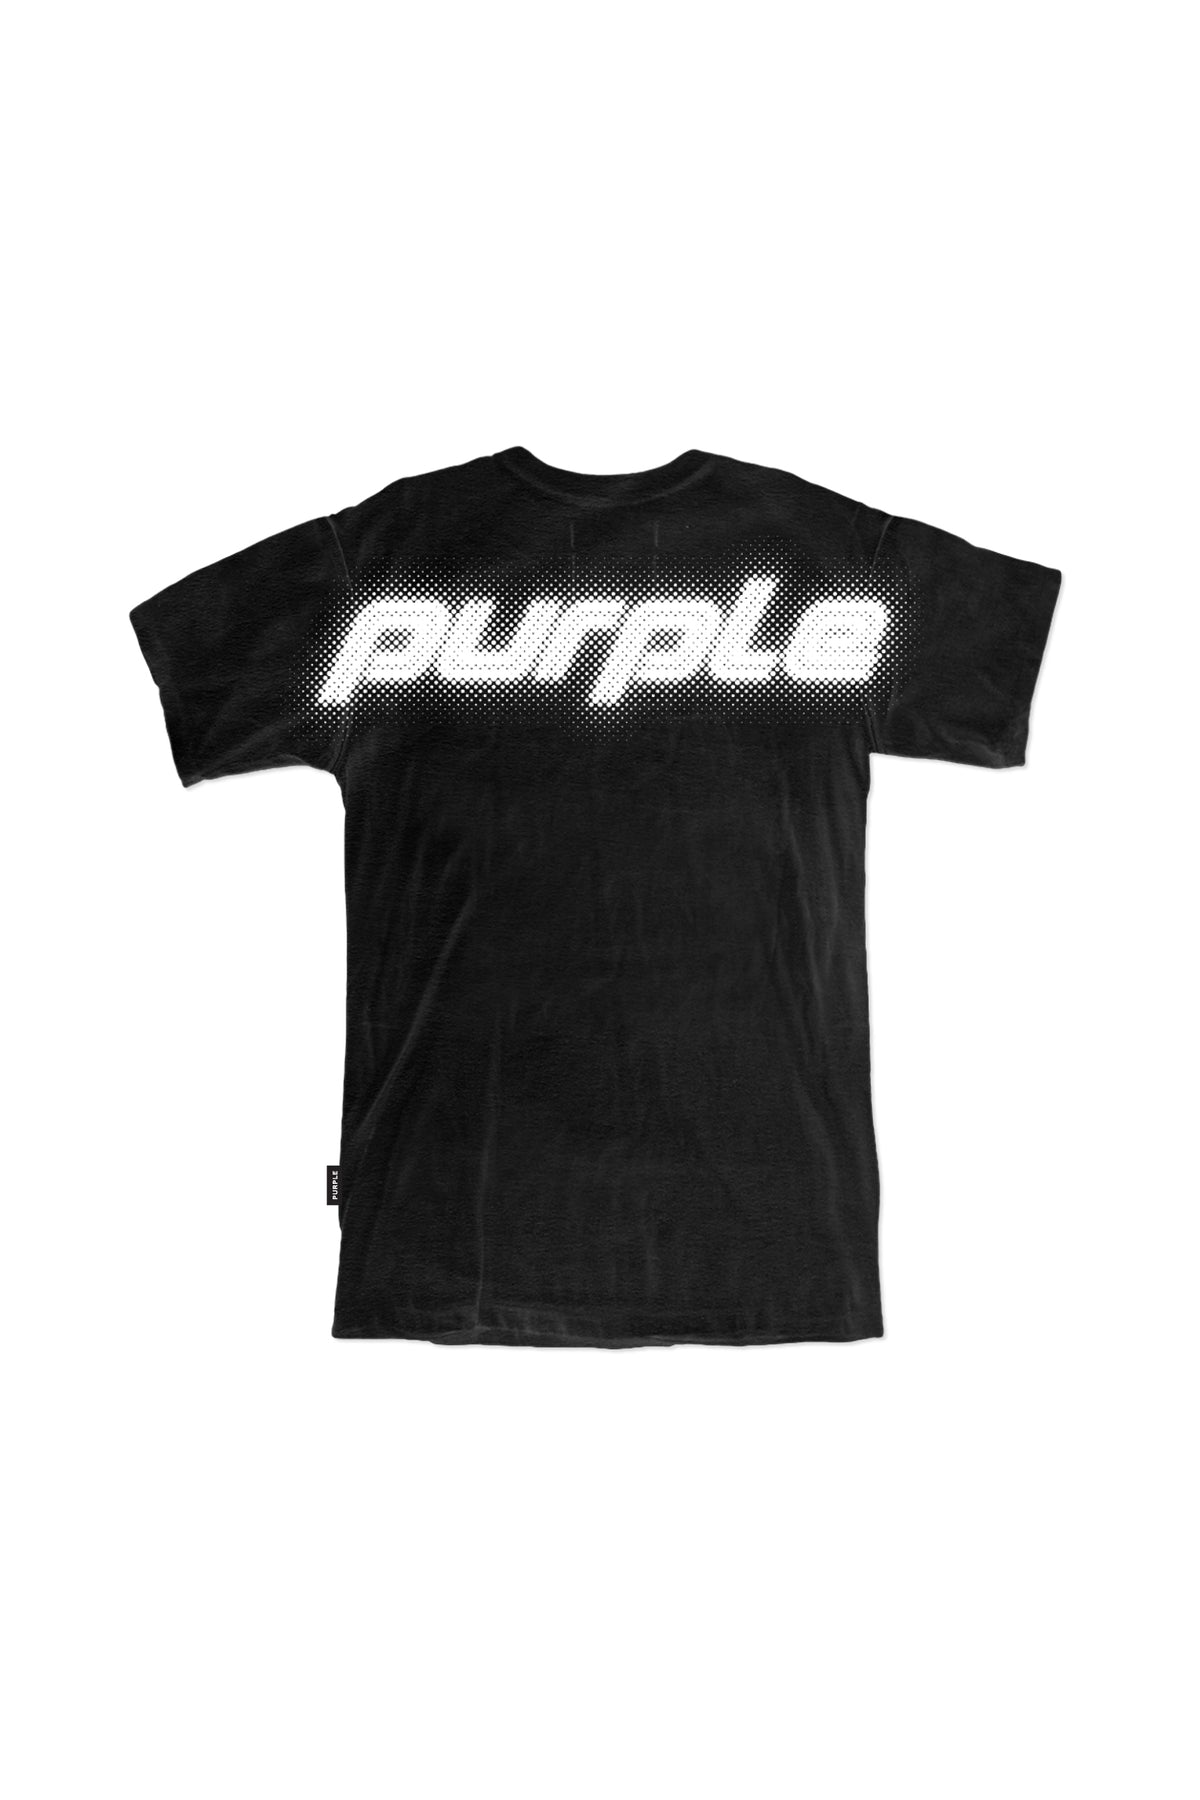 Purple Brand Textured Jersey Short Sleeve - JBBT